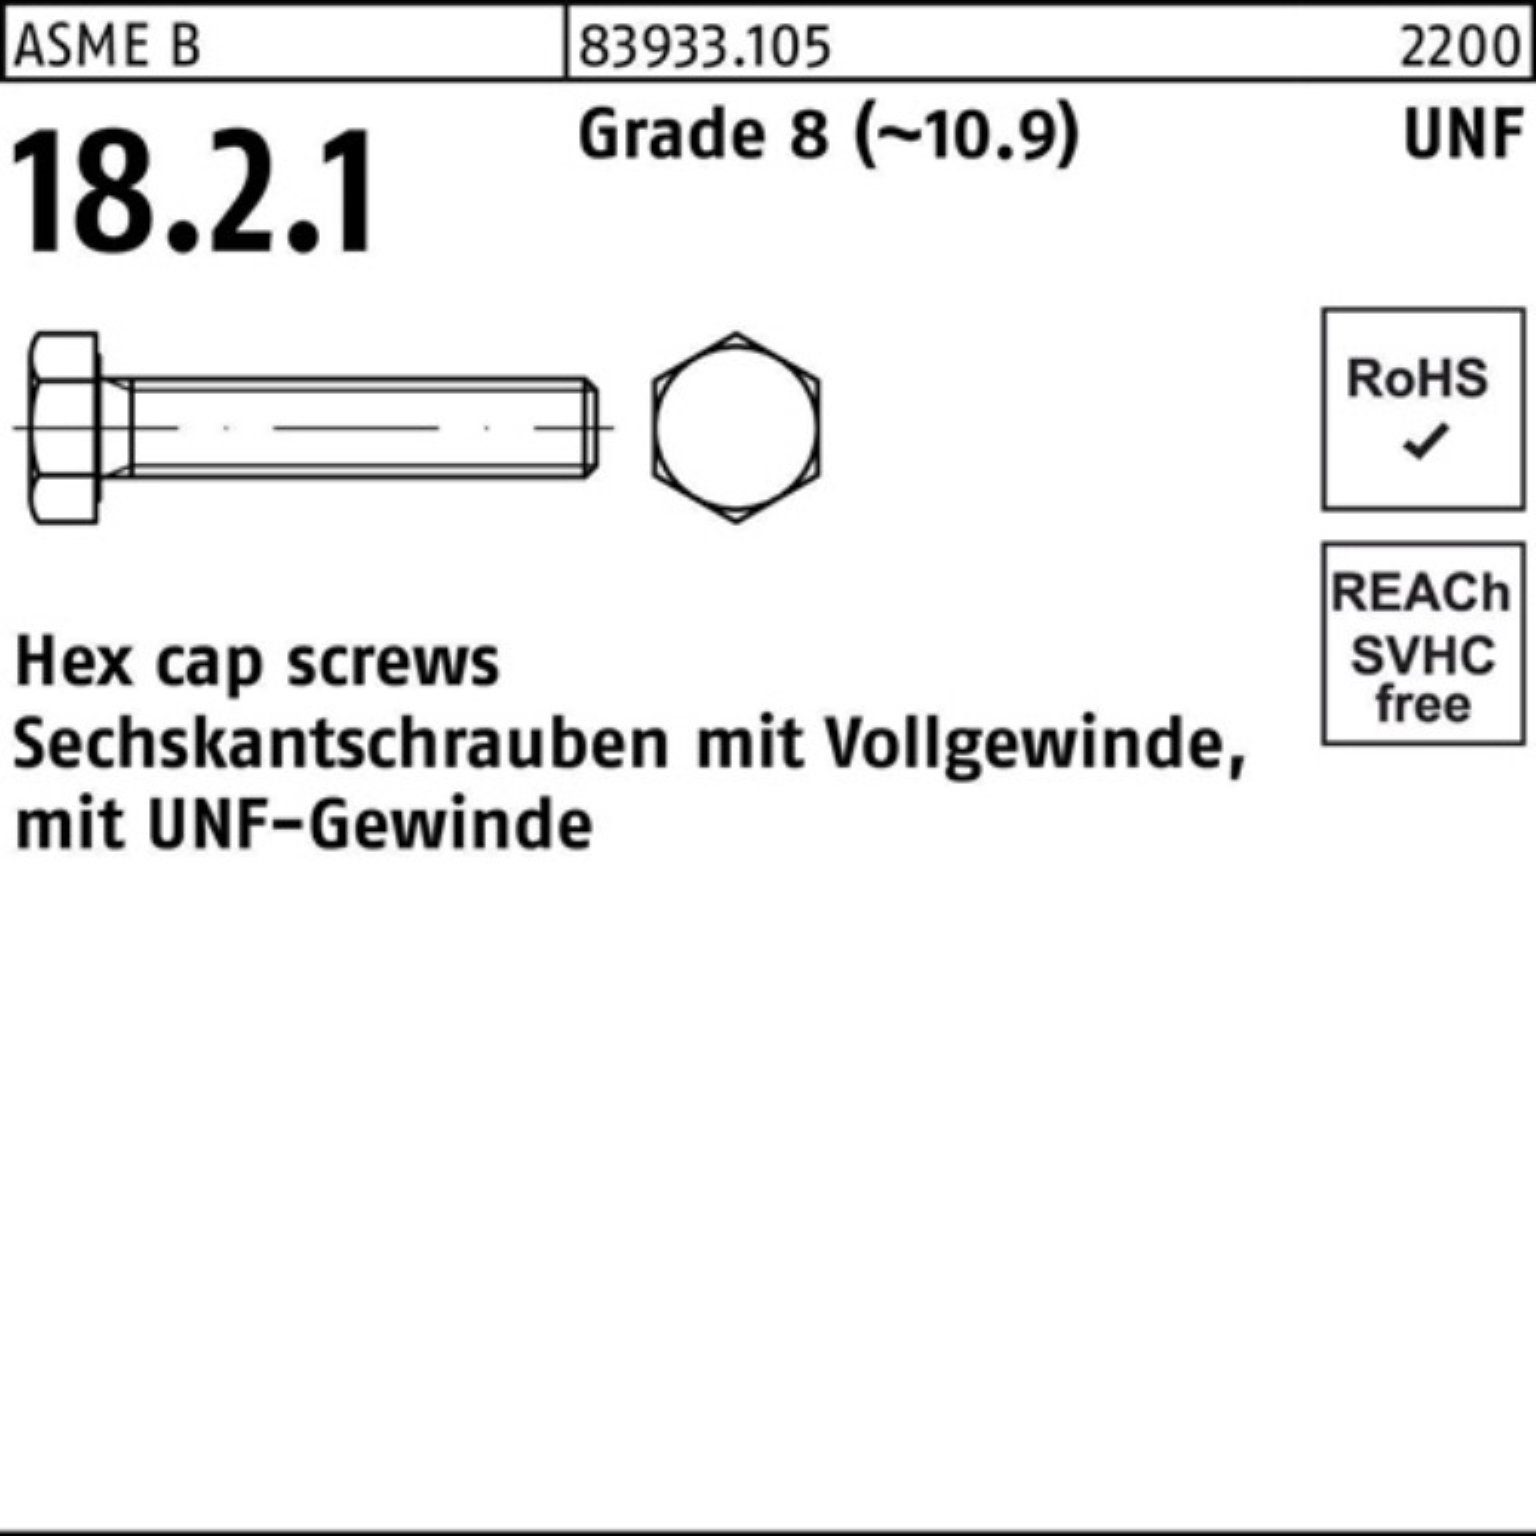 Reyher Sechskantschraube 100er Pack Sechskantschraube R 83933 UNF-Gewinde VG 3/4x 1 Grade 8 (1